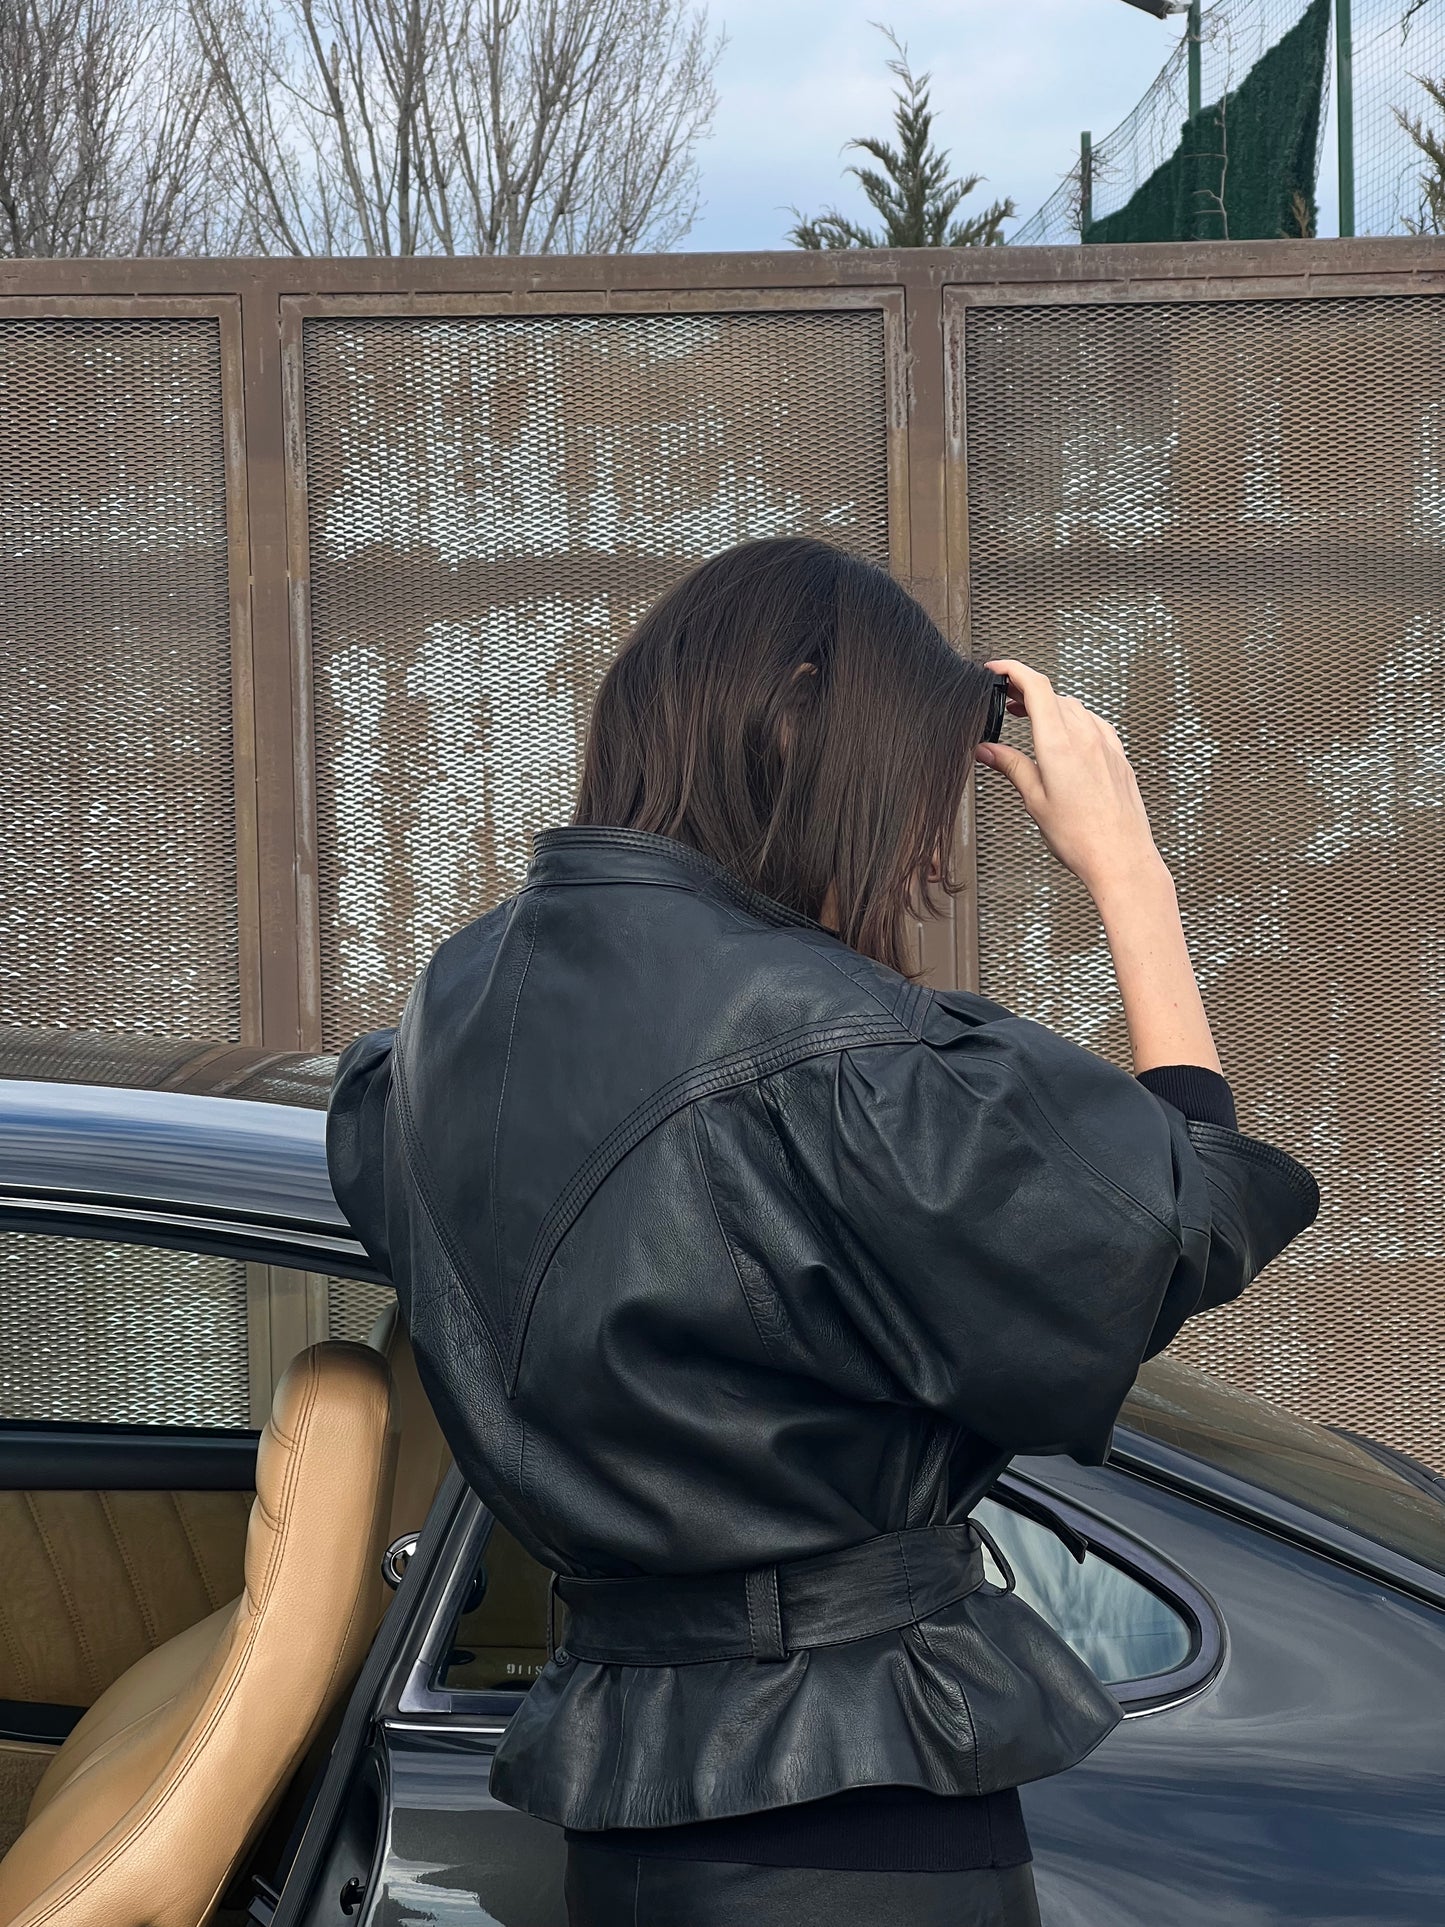 woman wearing a black woman’s leather jacket looking away